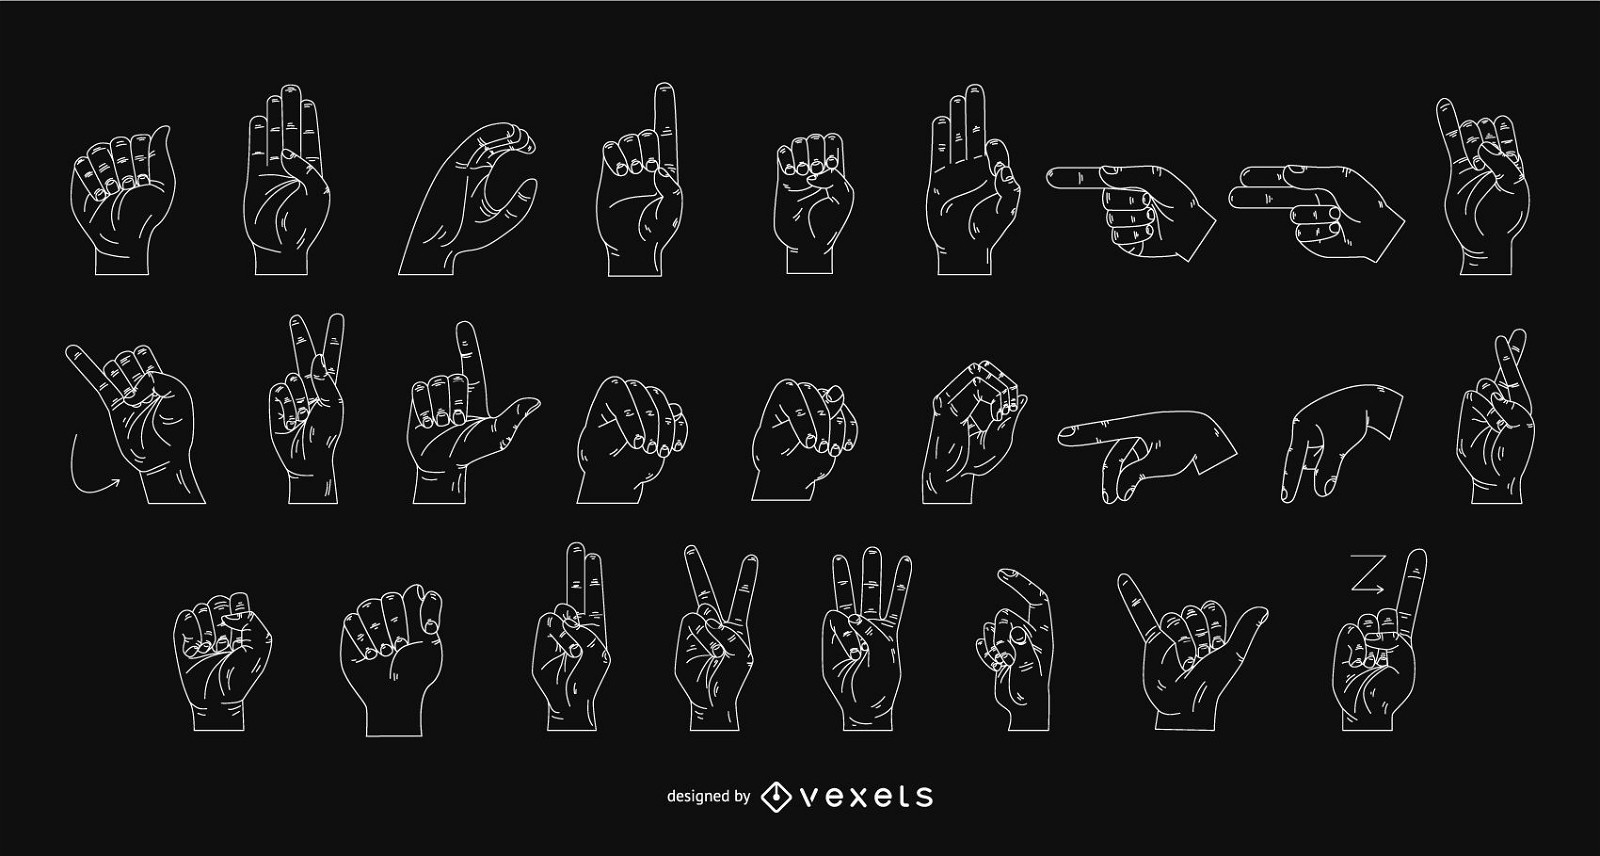 sign language chart design